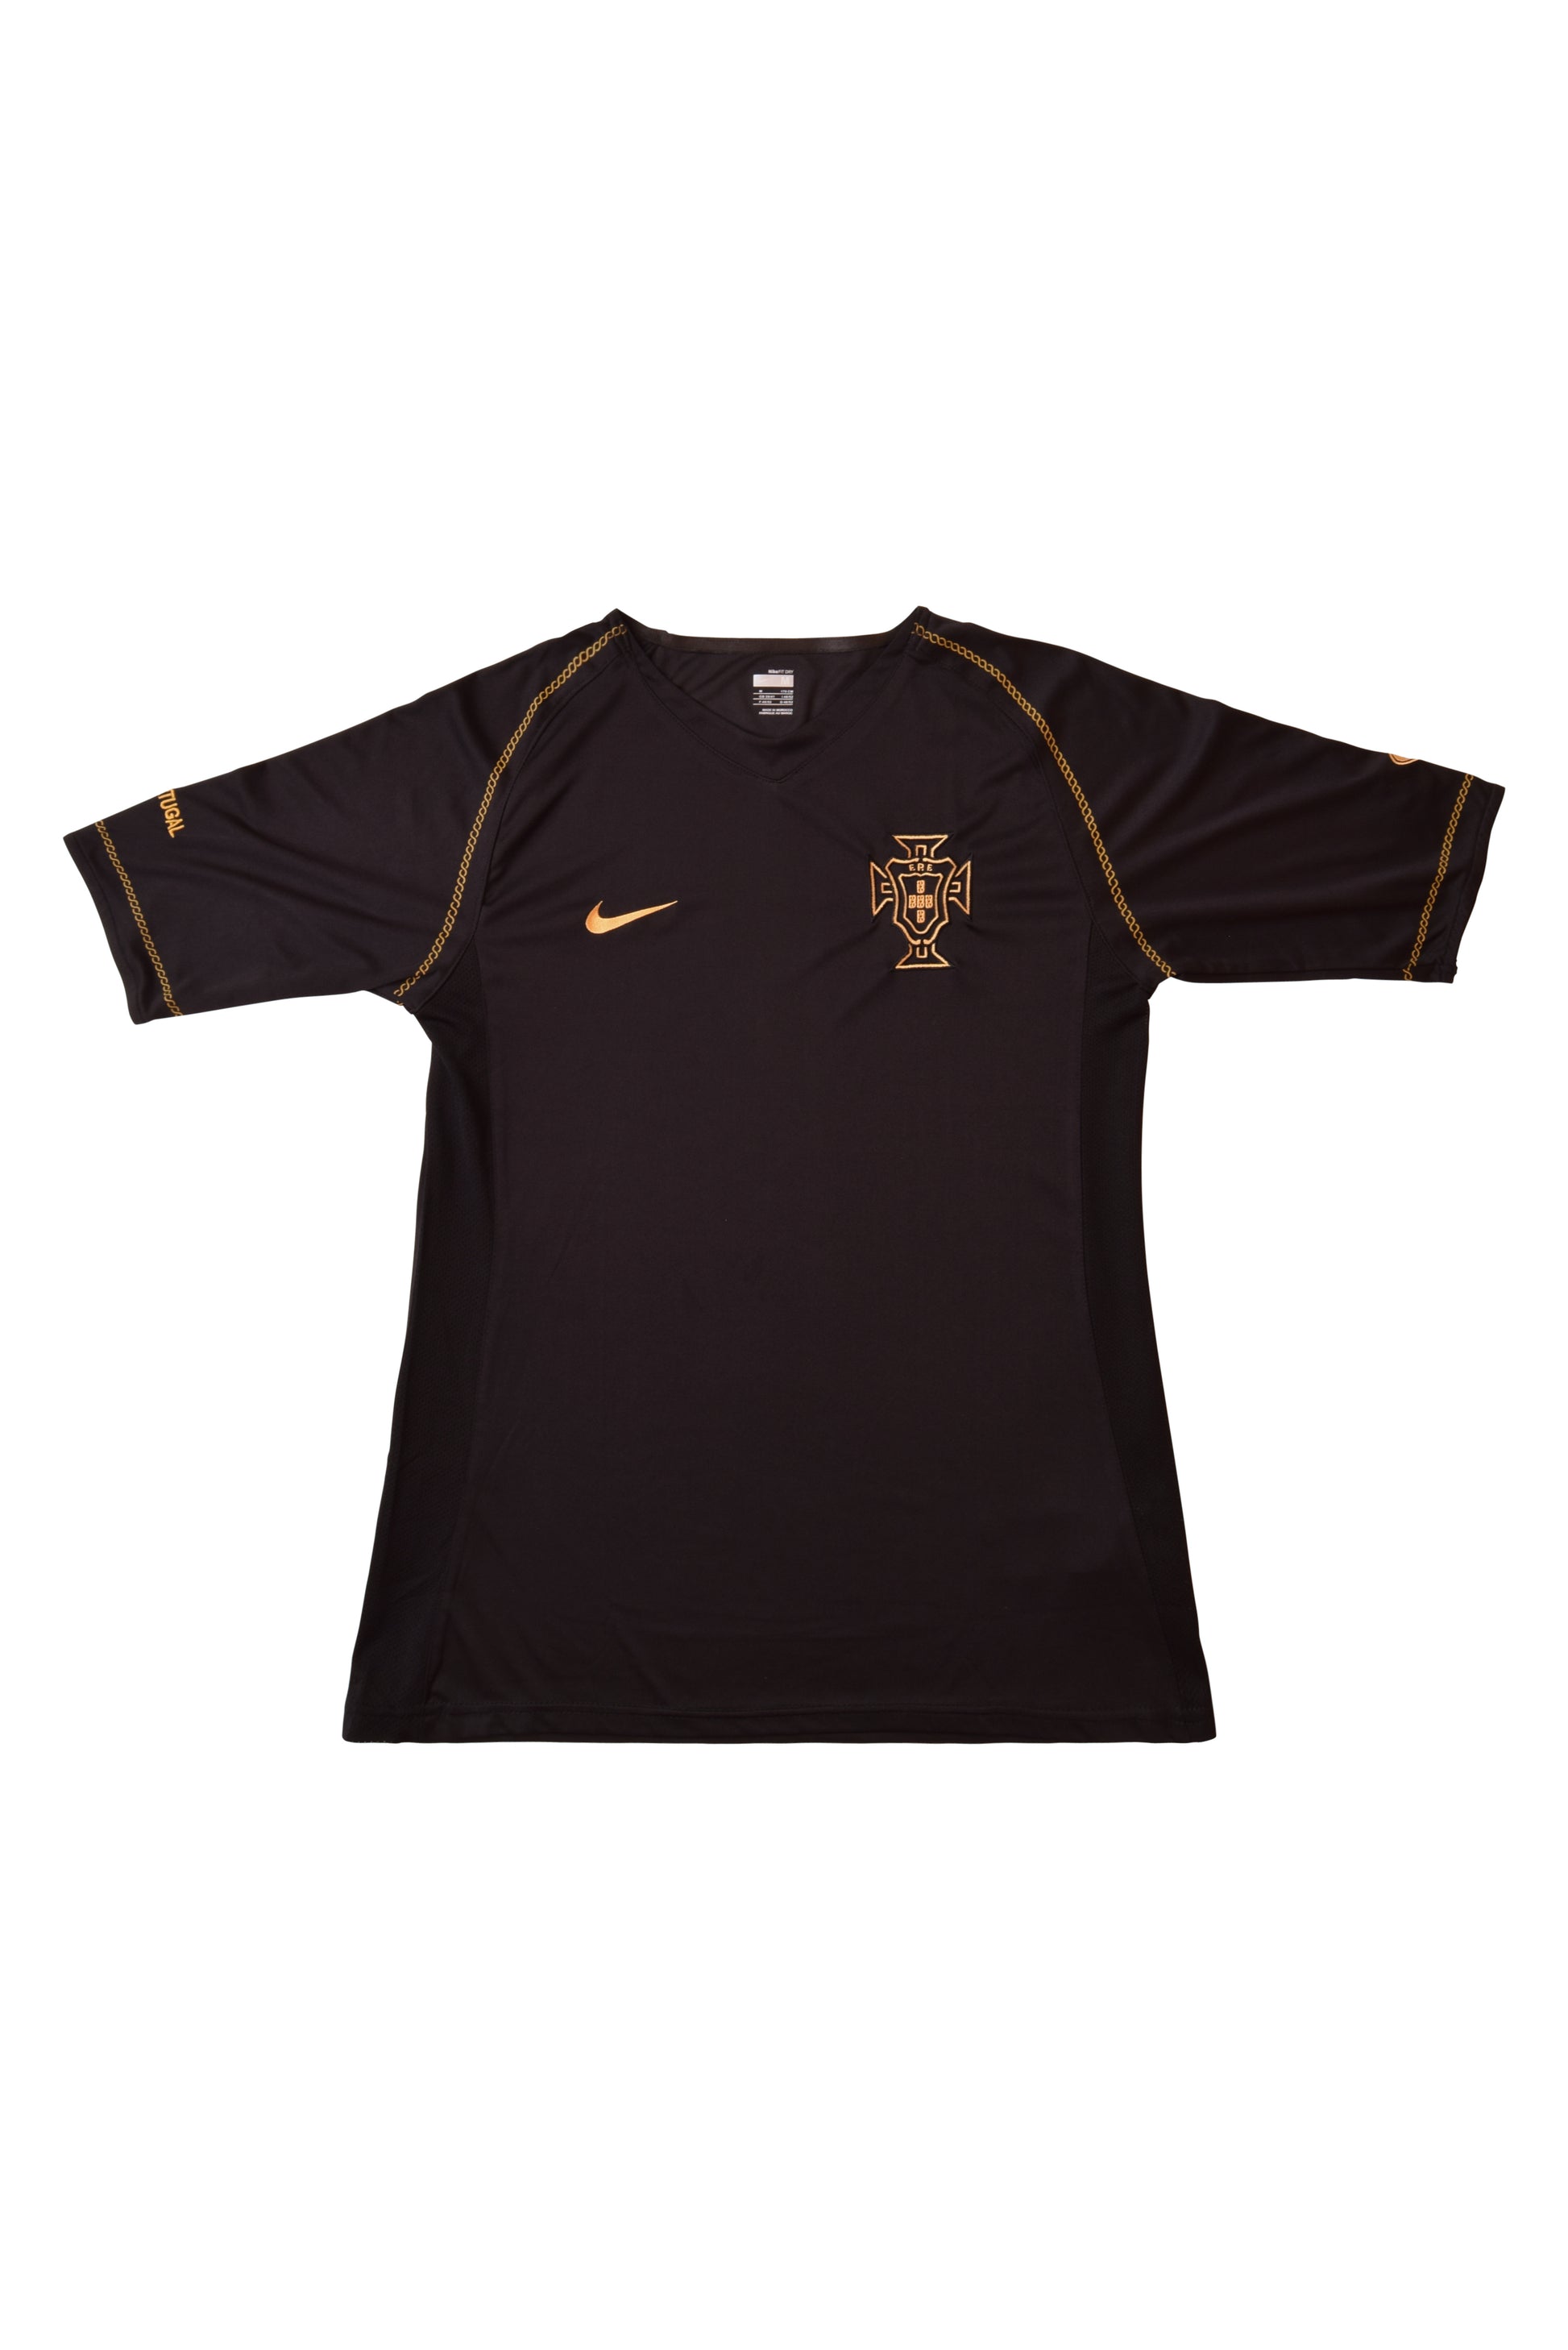 Portugal Nike Football Shirt Black Size M FIT DRY 2006 2007